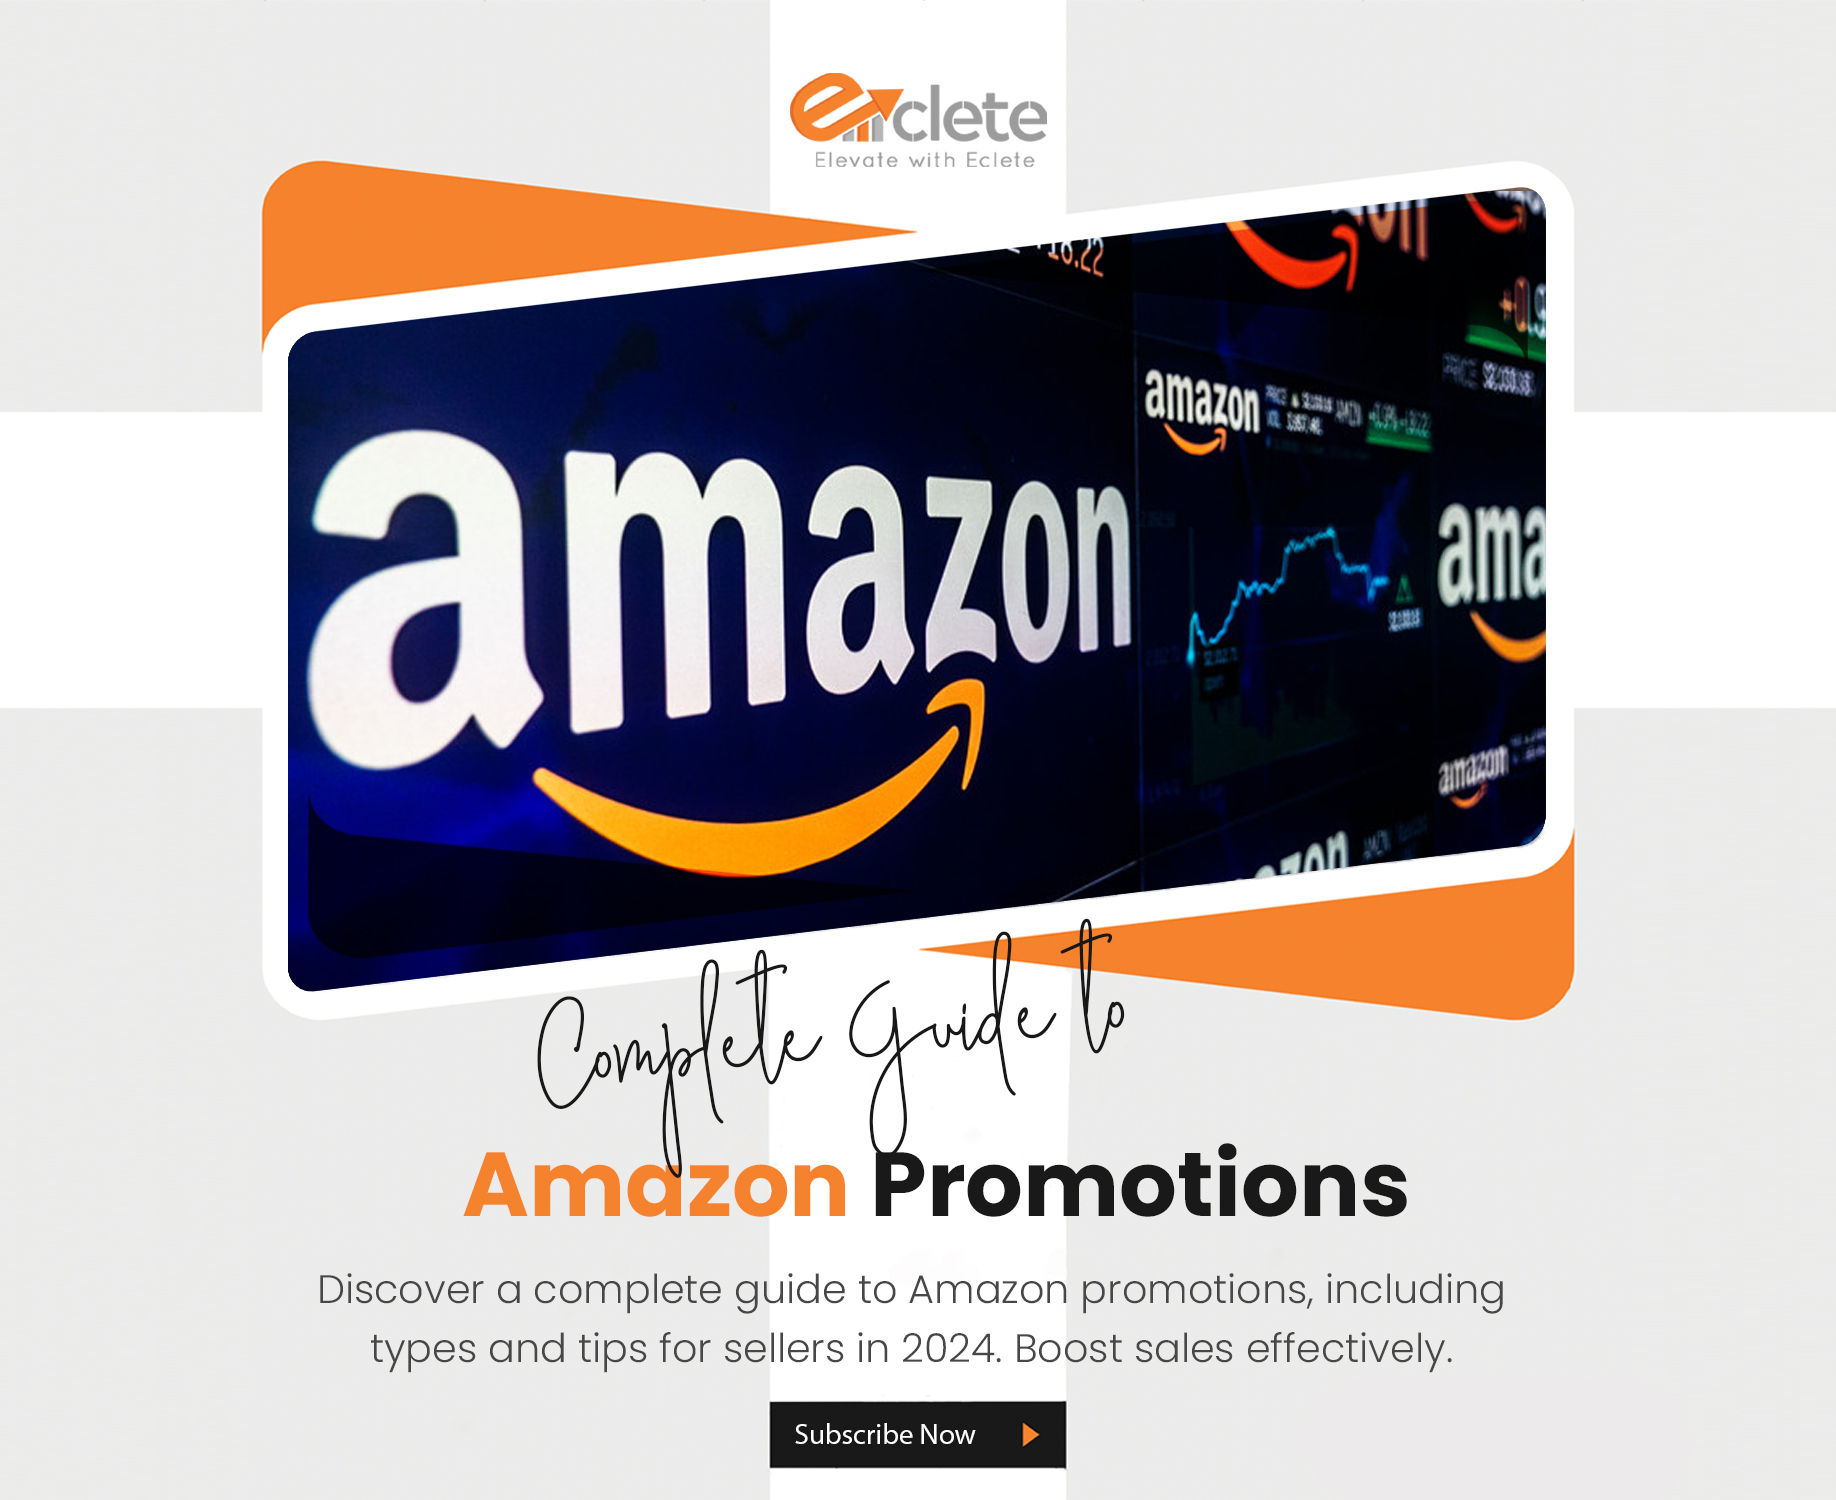 Amazon Promotions